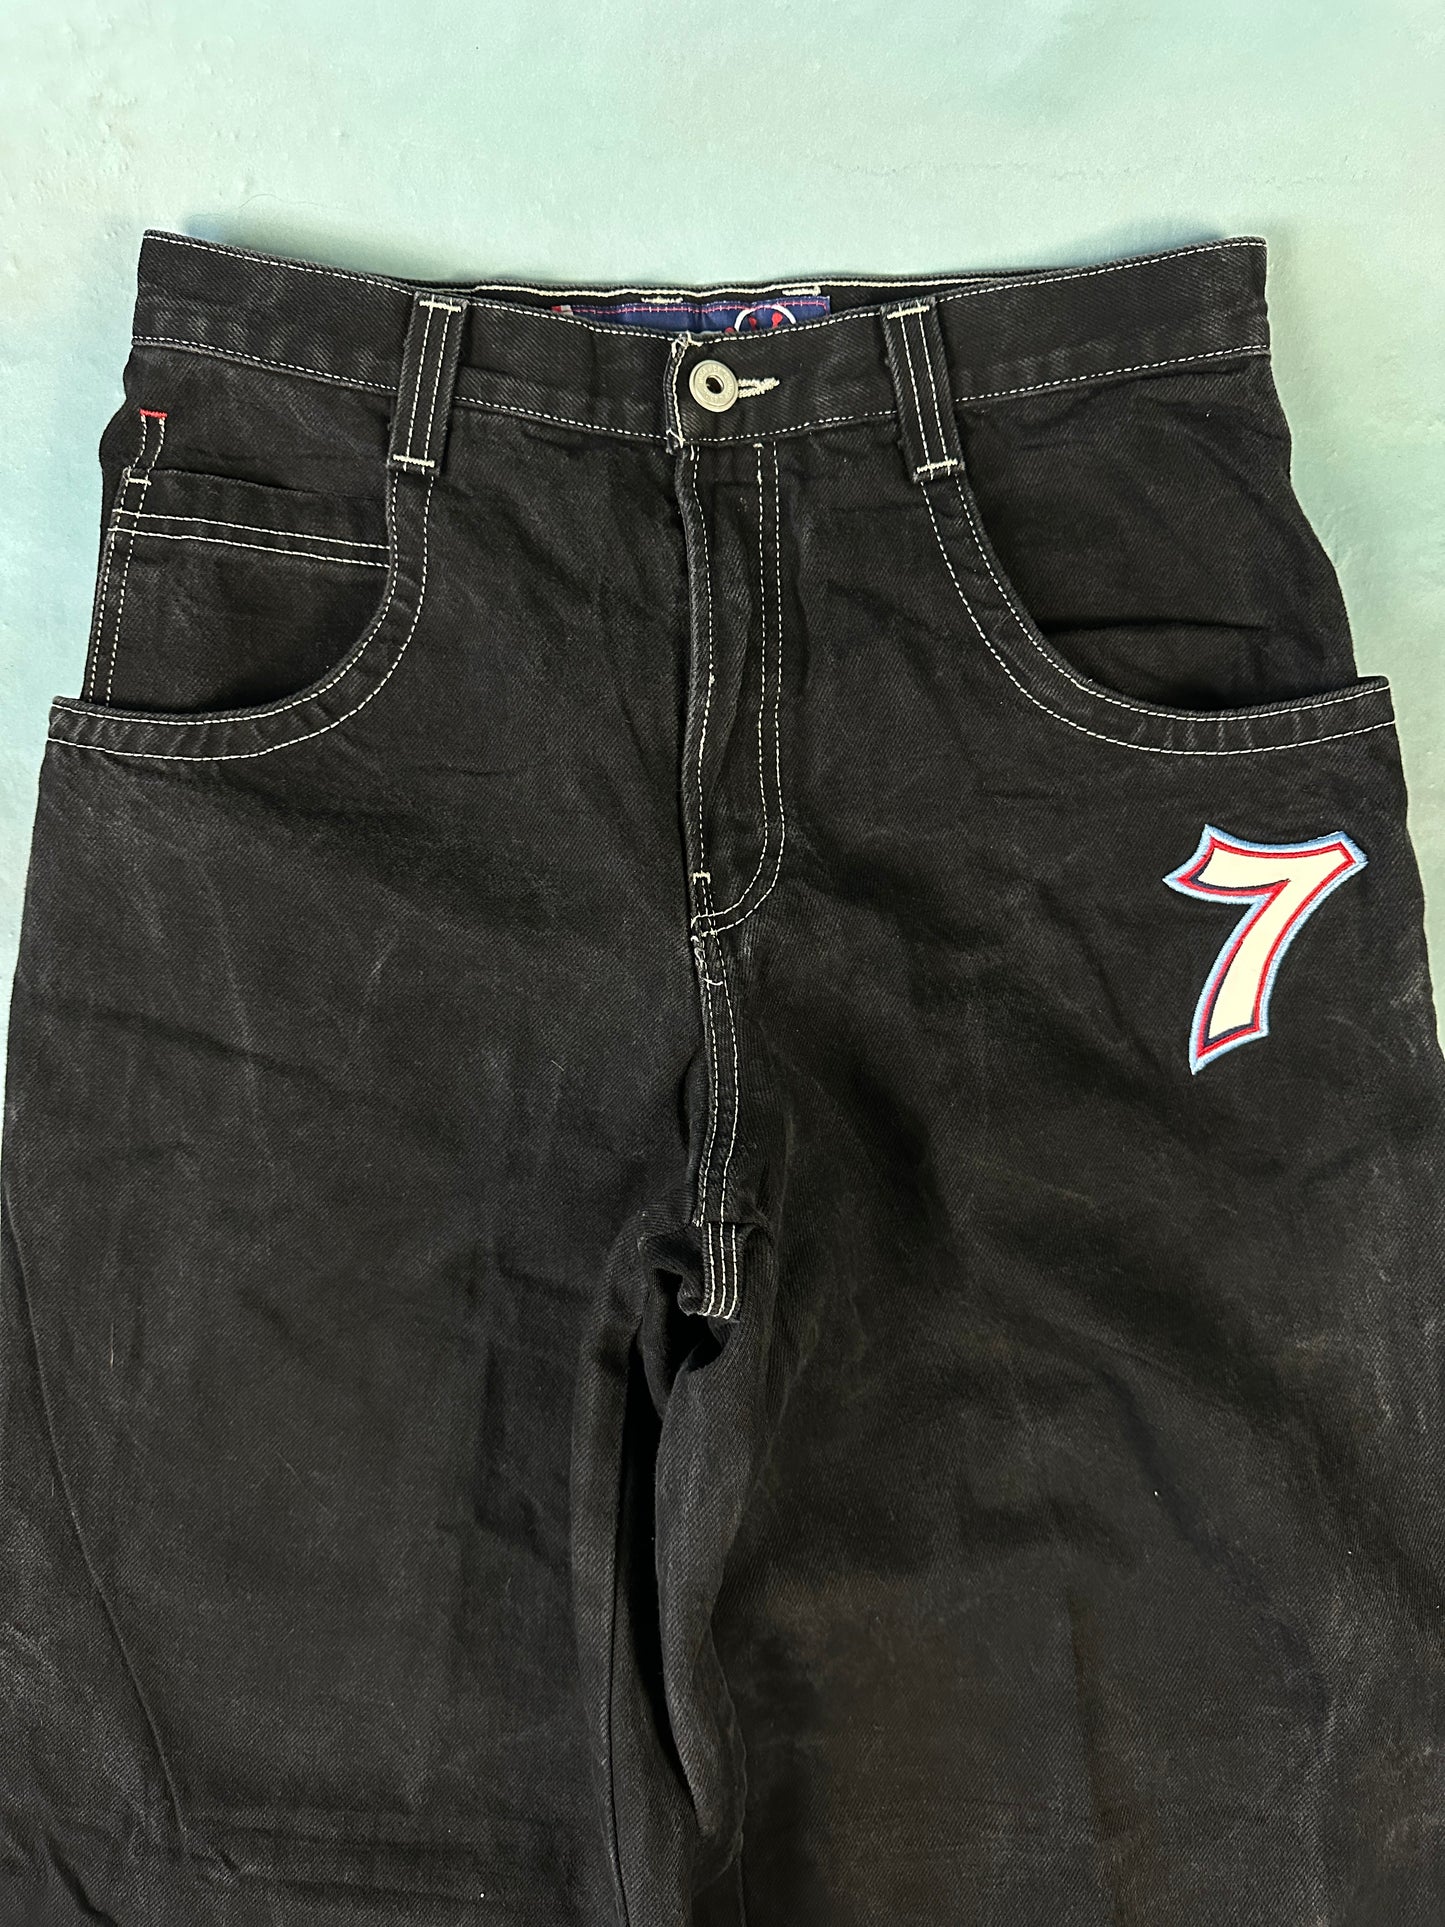 JNCO 7 Dice Vintage Baggy Jeans - 32 x 32